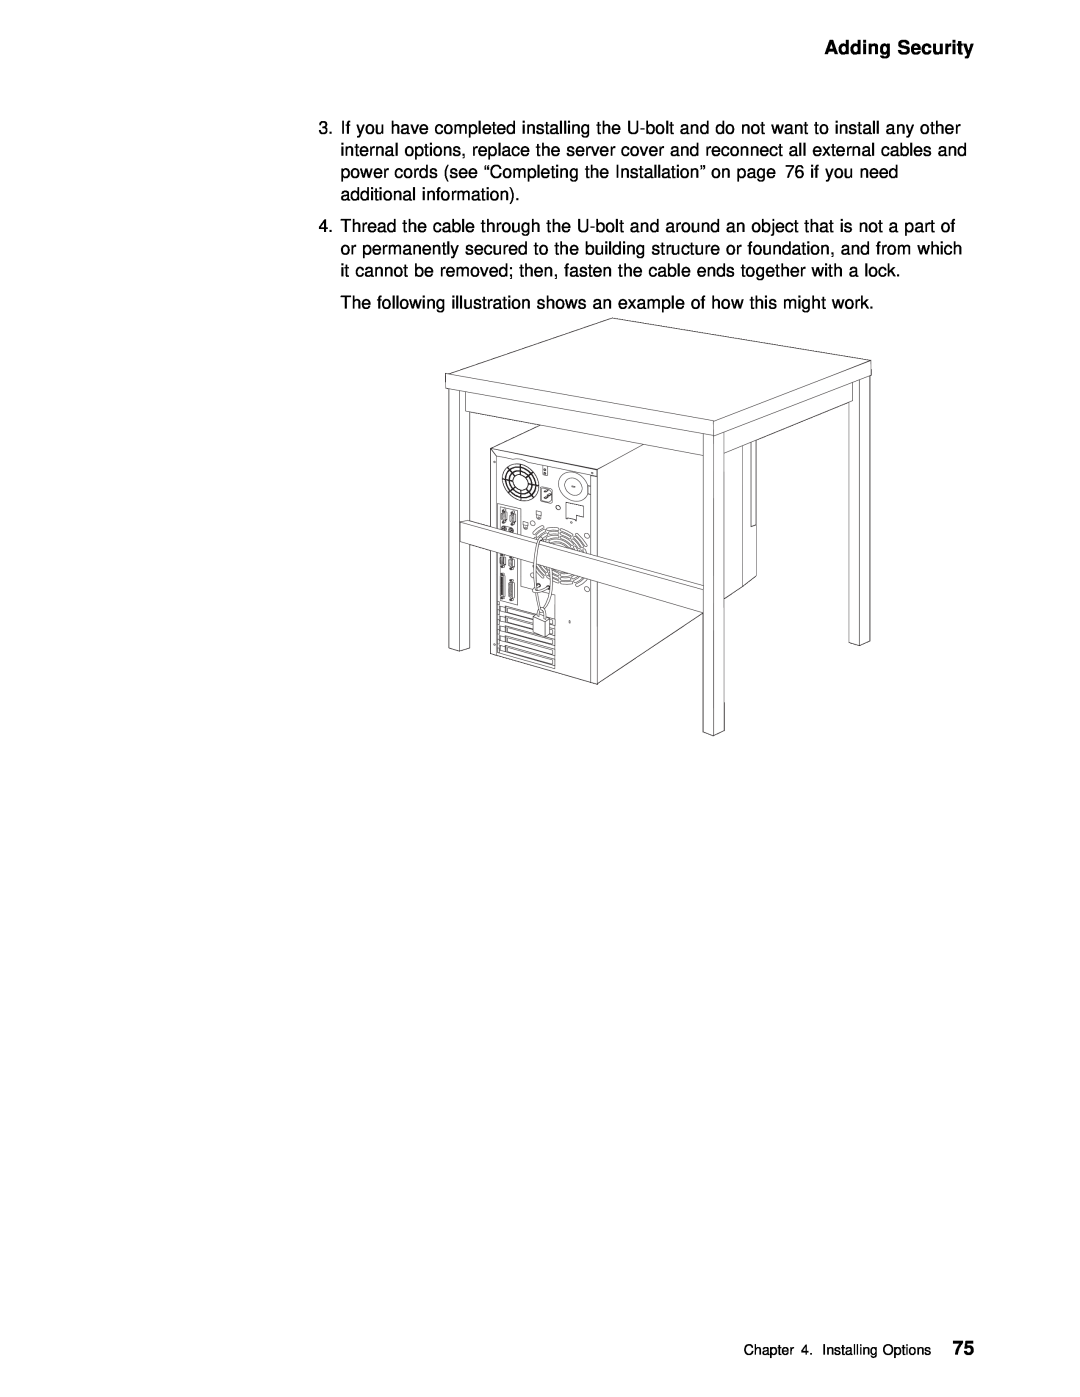 IBM 5000 manual Adding Security, Installing Options75 